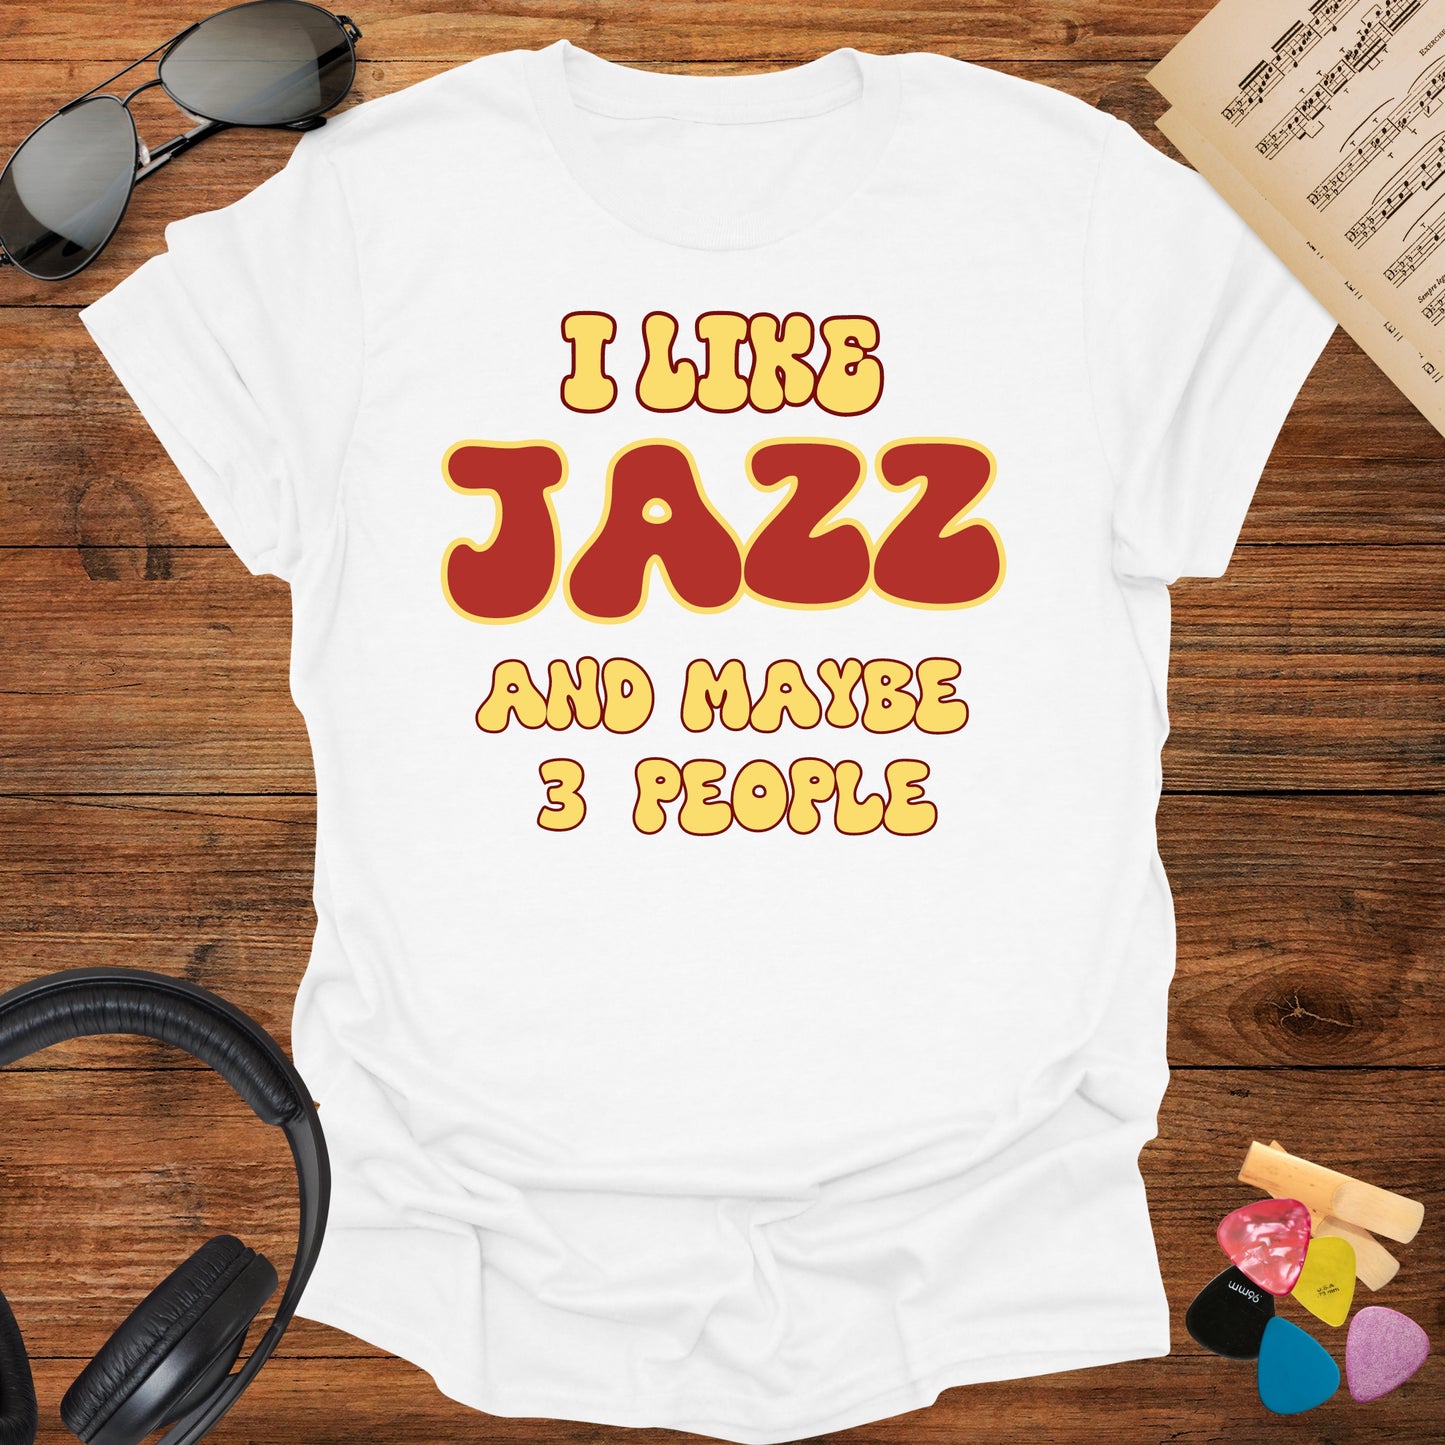 I Like Jazz and Maybe 3 People